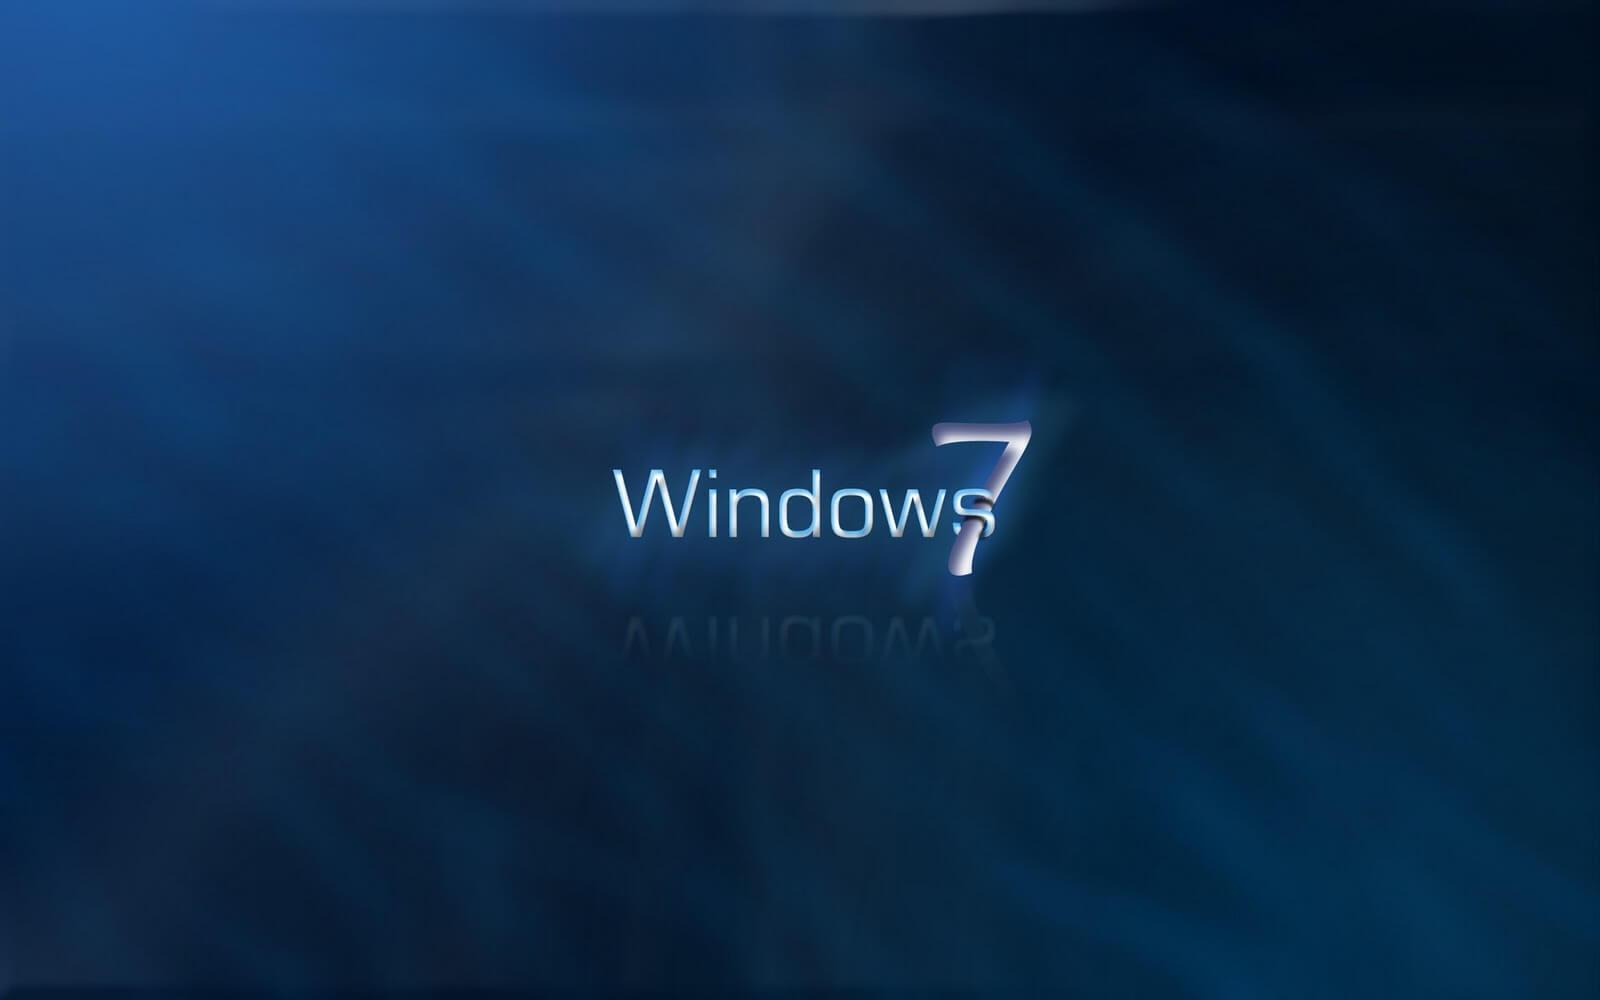 Windows 7 Wallpaper Free Download Desktop